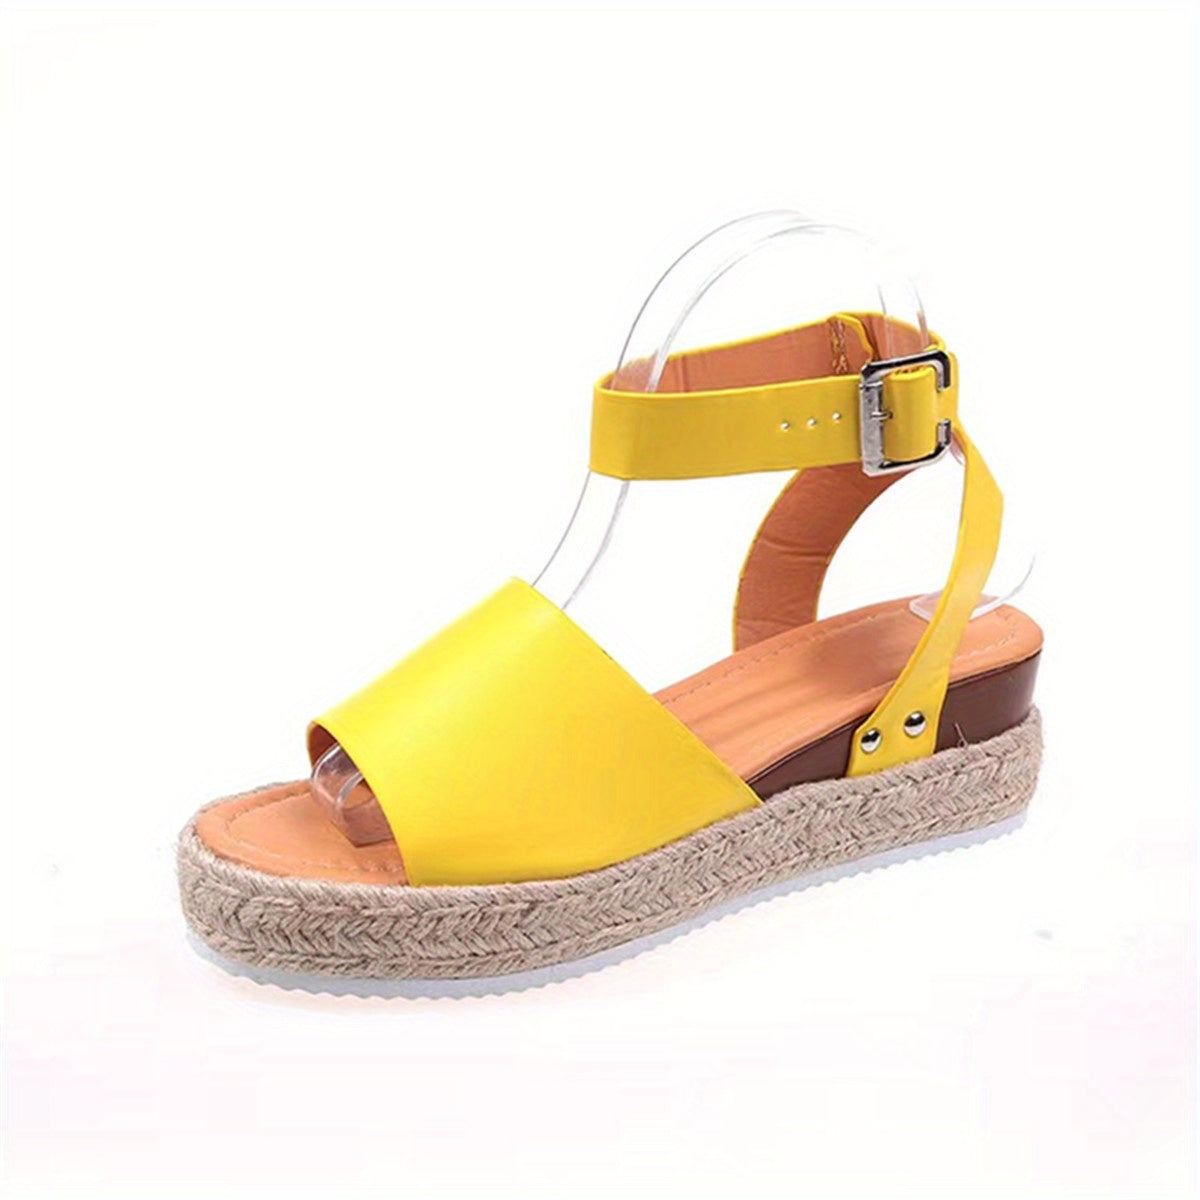 Women's Platform Espadrilles Sandals, Casual Open Toe Ankle Buckle Strap Flat Shoes, Lightweight Non Slip Sandals